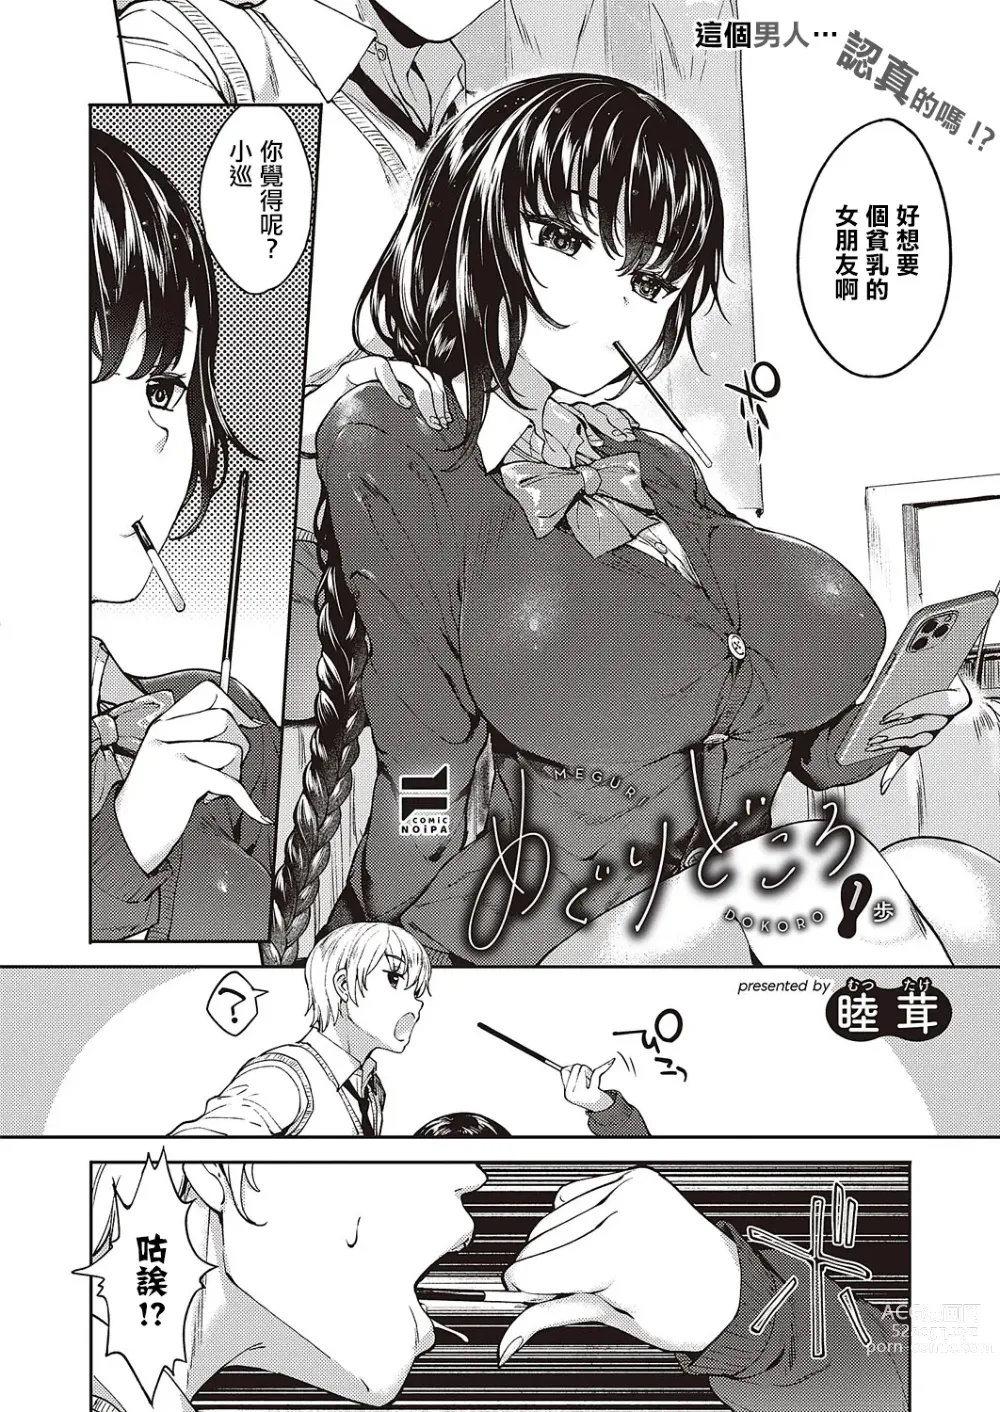 Page 2 of manga めぐりどころ 1歩